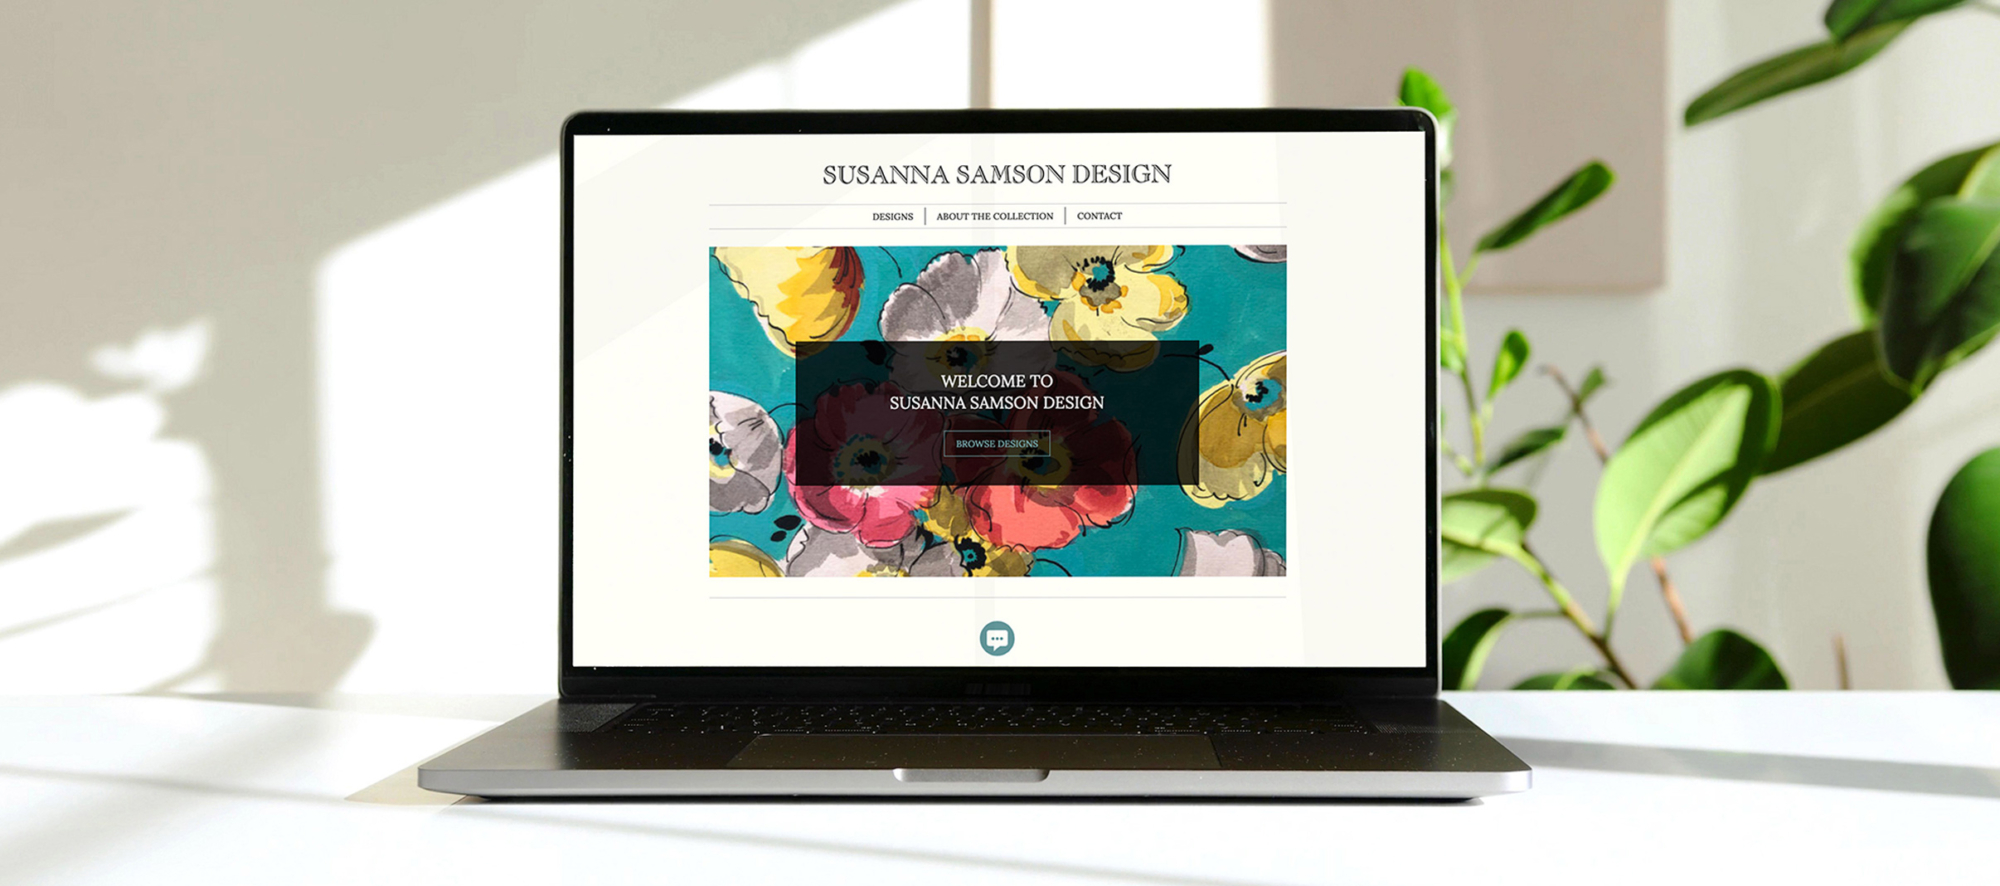 website design sreen on a laptop for susanna samson by blooberry creatice